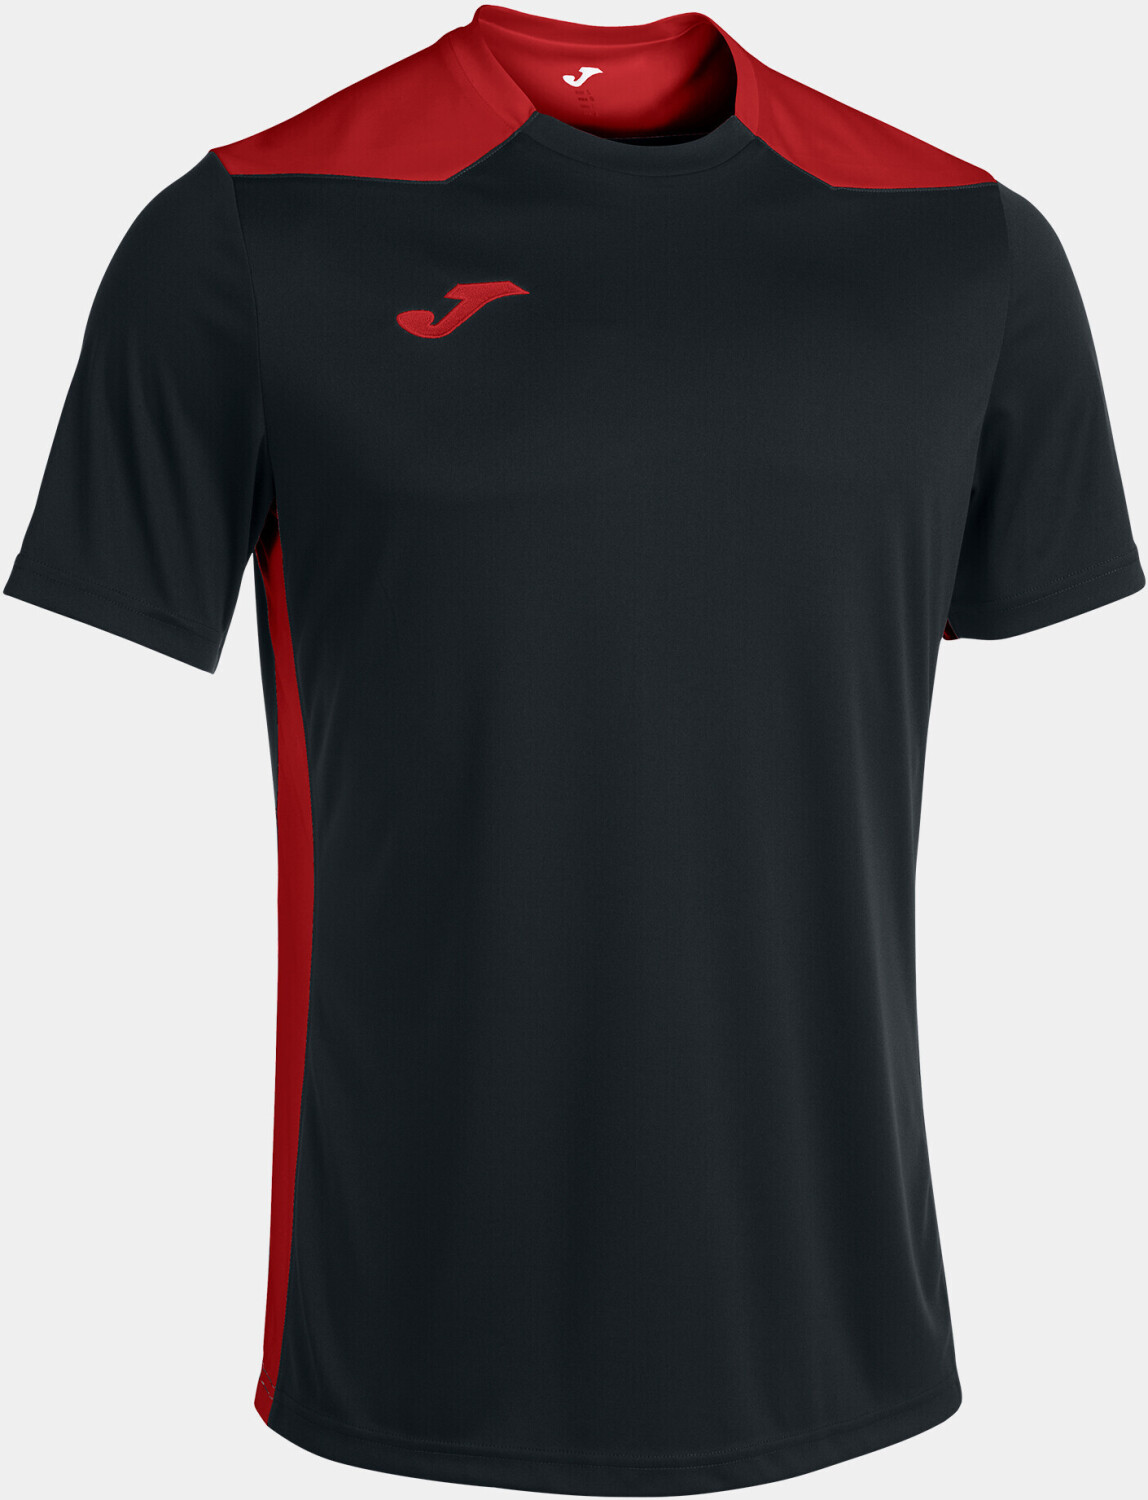 Photos - Football Kit Joma Championship VI Shirt Youth  black/red (101822k)